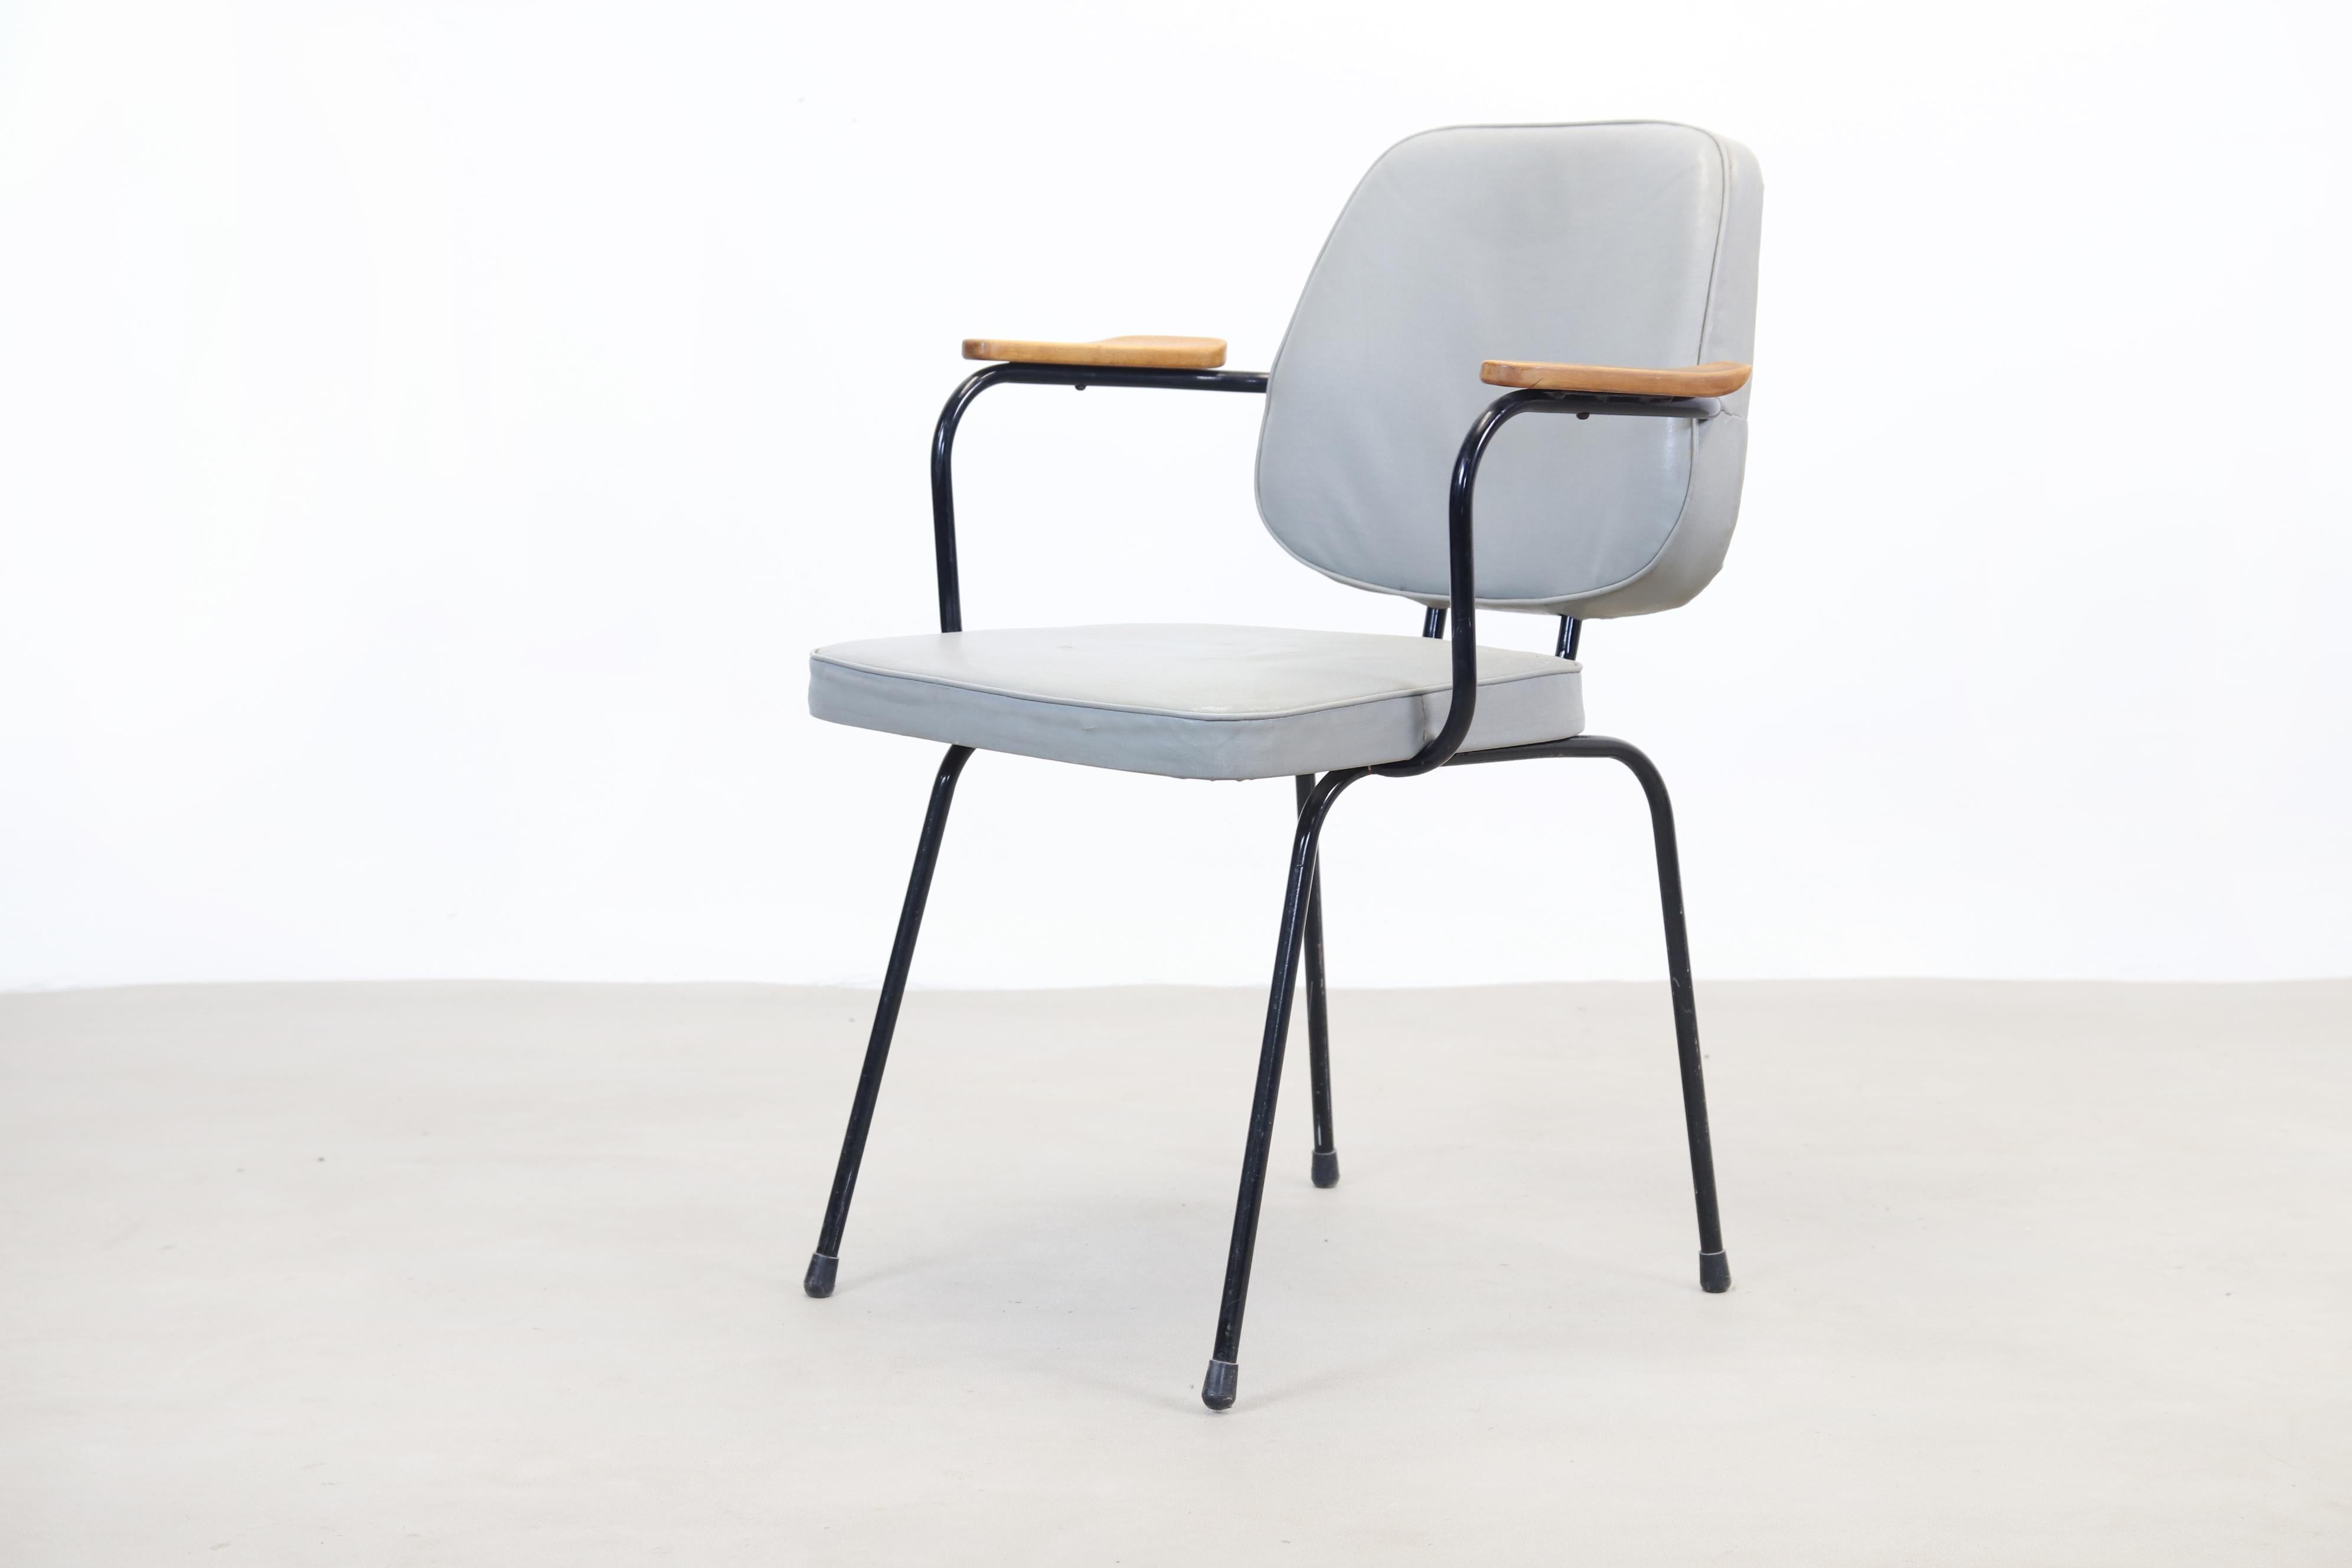 Mid-Century Modern Pastoe FM01 Dutch design Chair by Cees Braakman for Pastoe, 1950's Netherlands